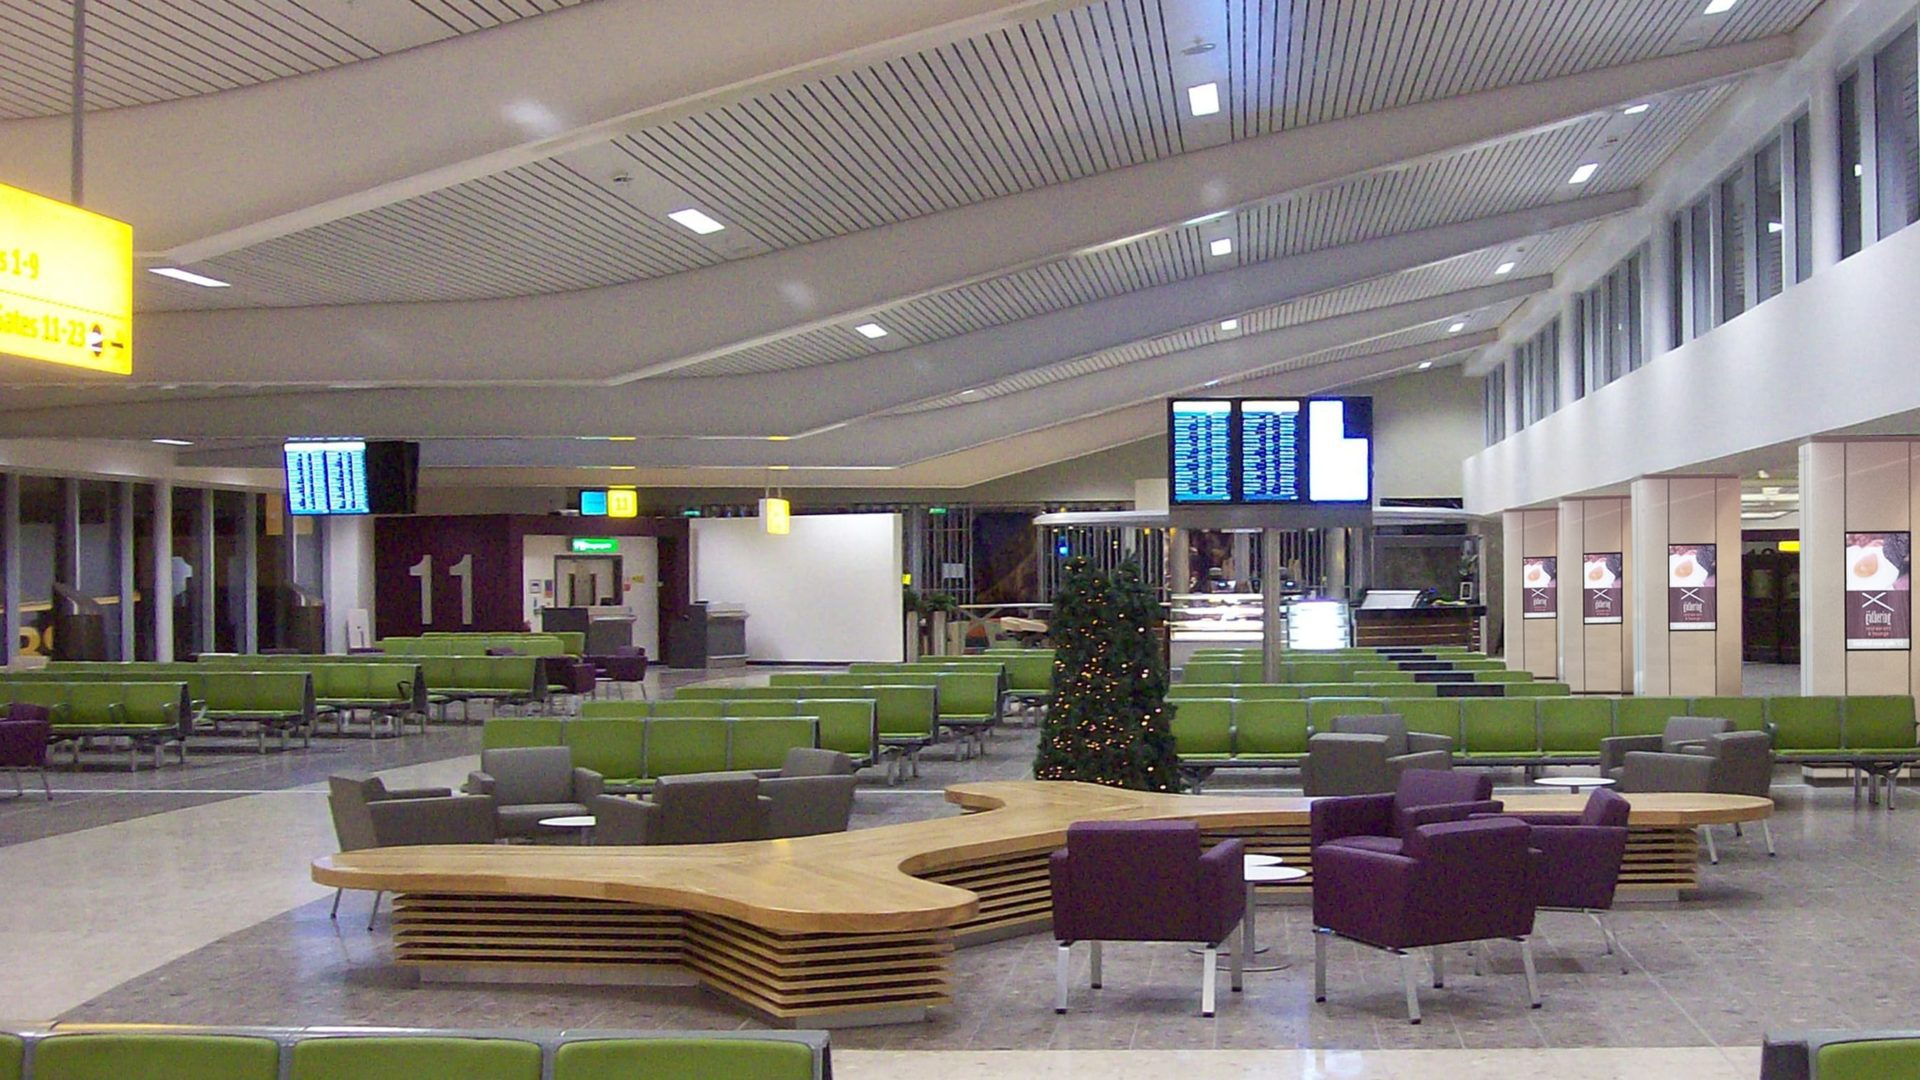 edinburgh airport building interior terminal 11 waiting area